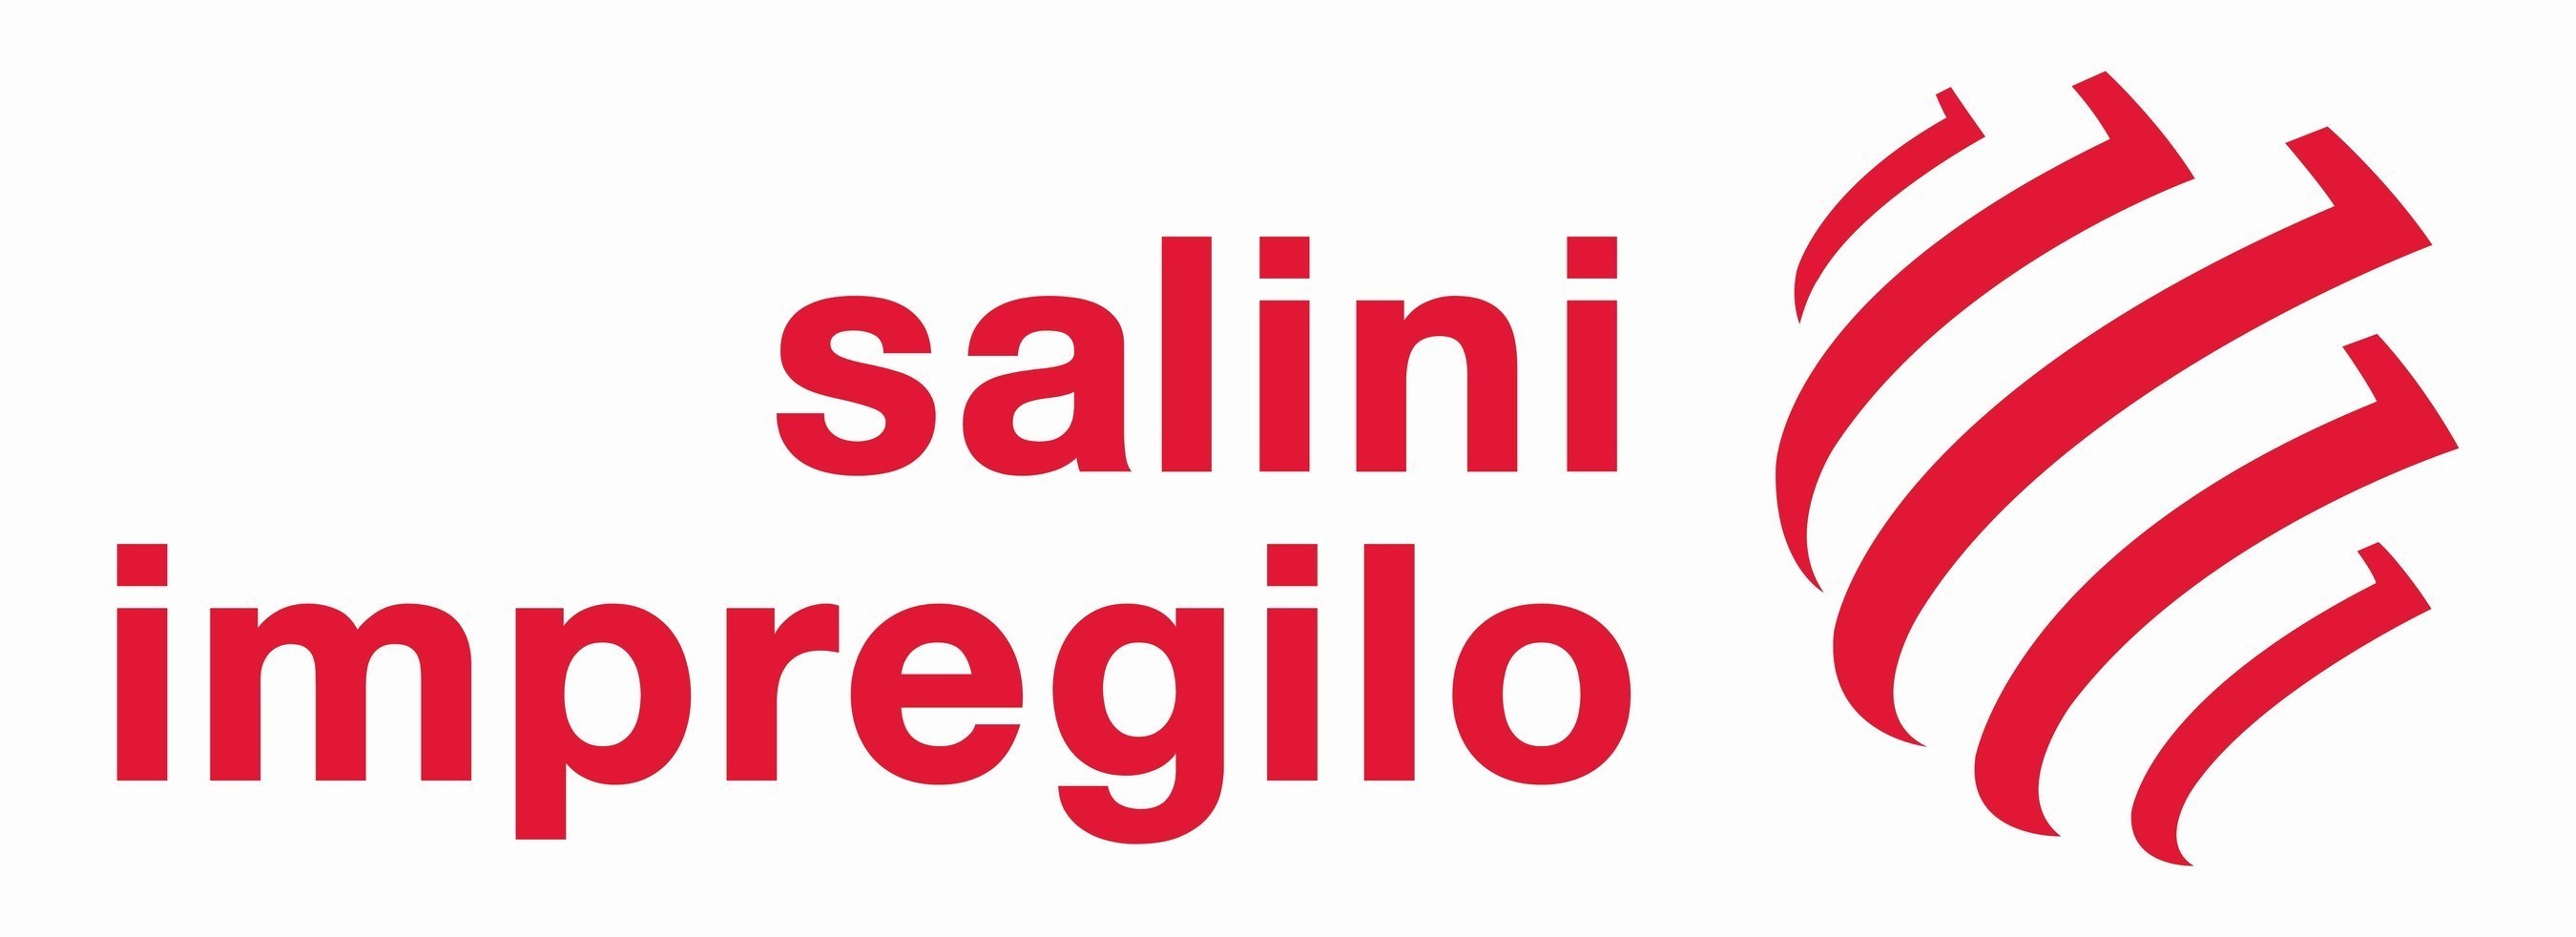 Salini Impregilo logo